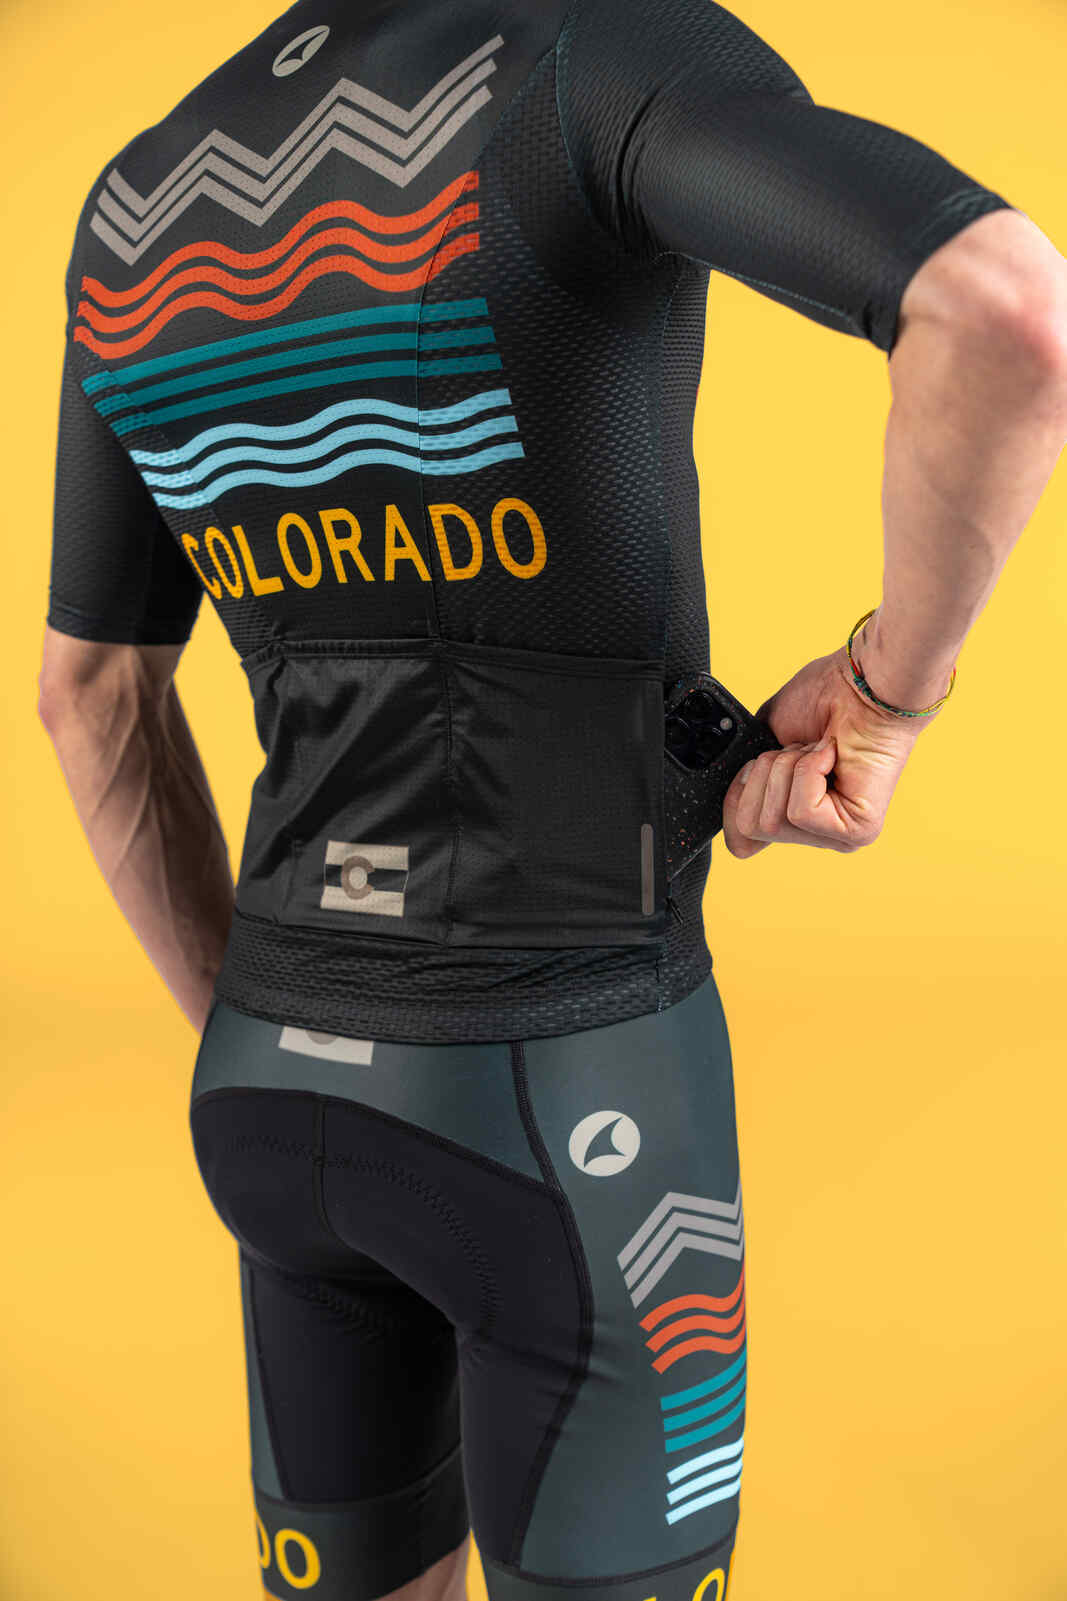 Men's Navy Blue Colorado Mesh Cycling Jersey - Zippered Side Pocket